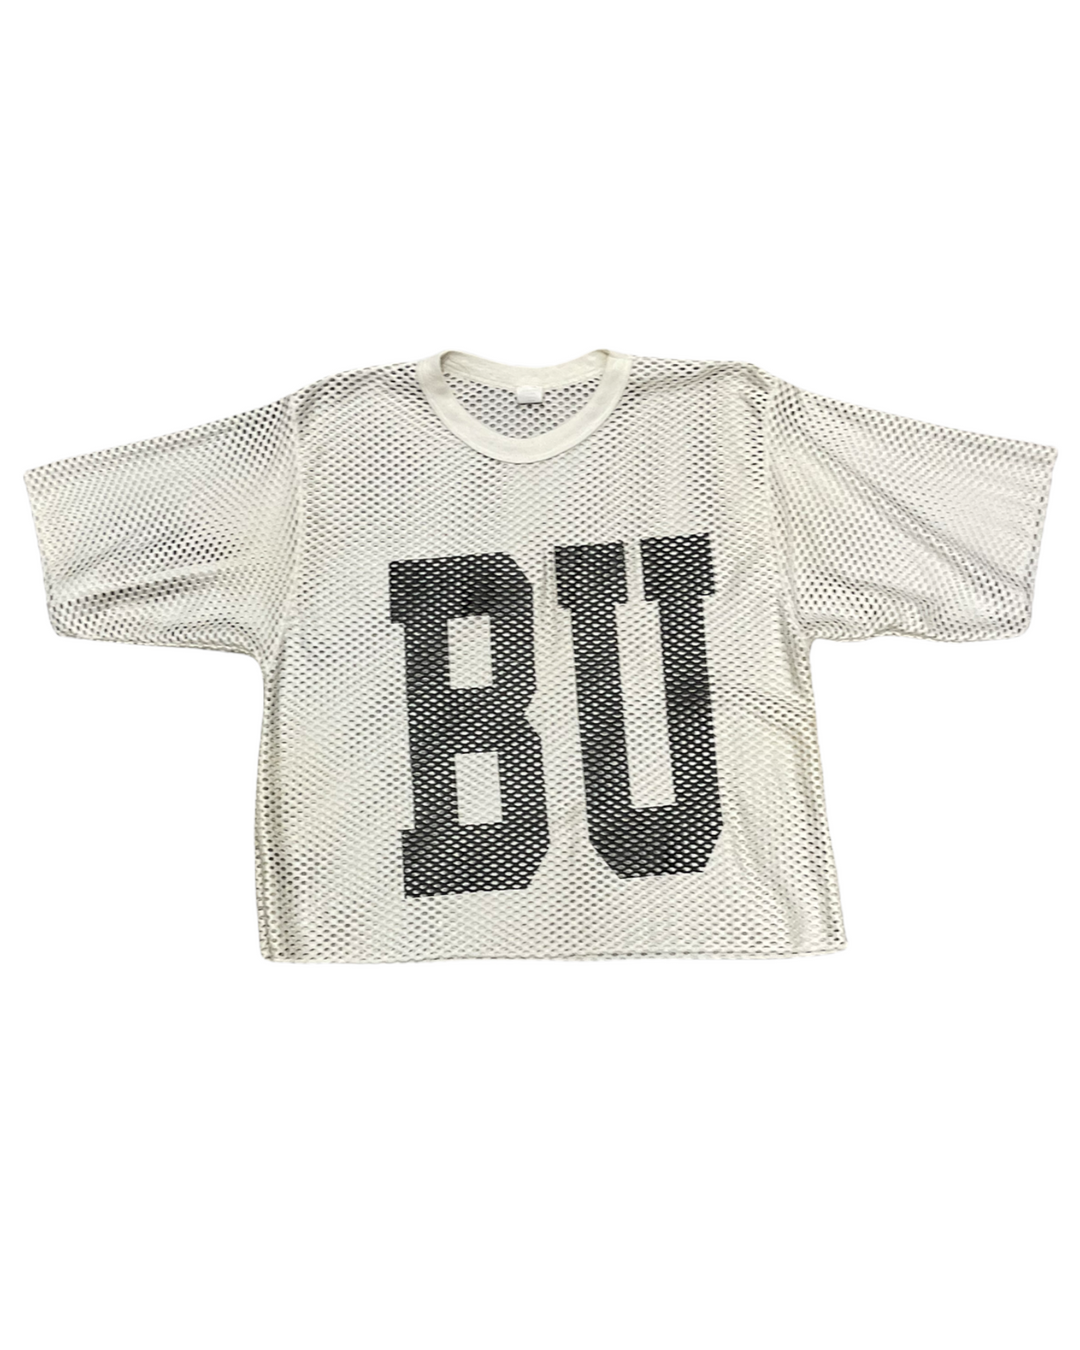 BU Cropped Vintage Jersey